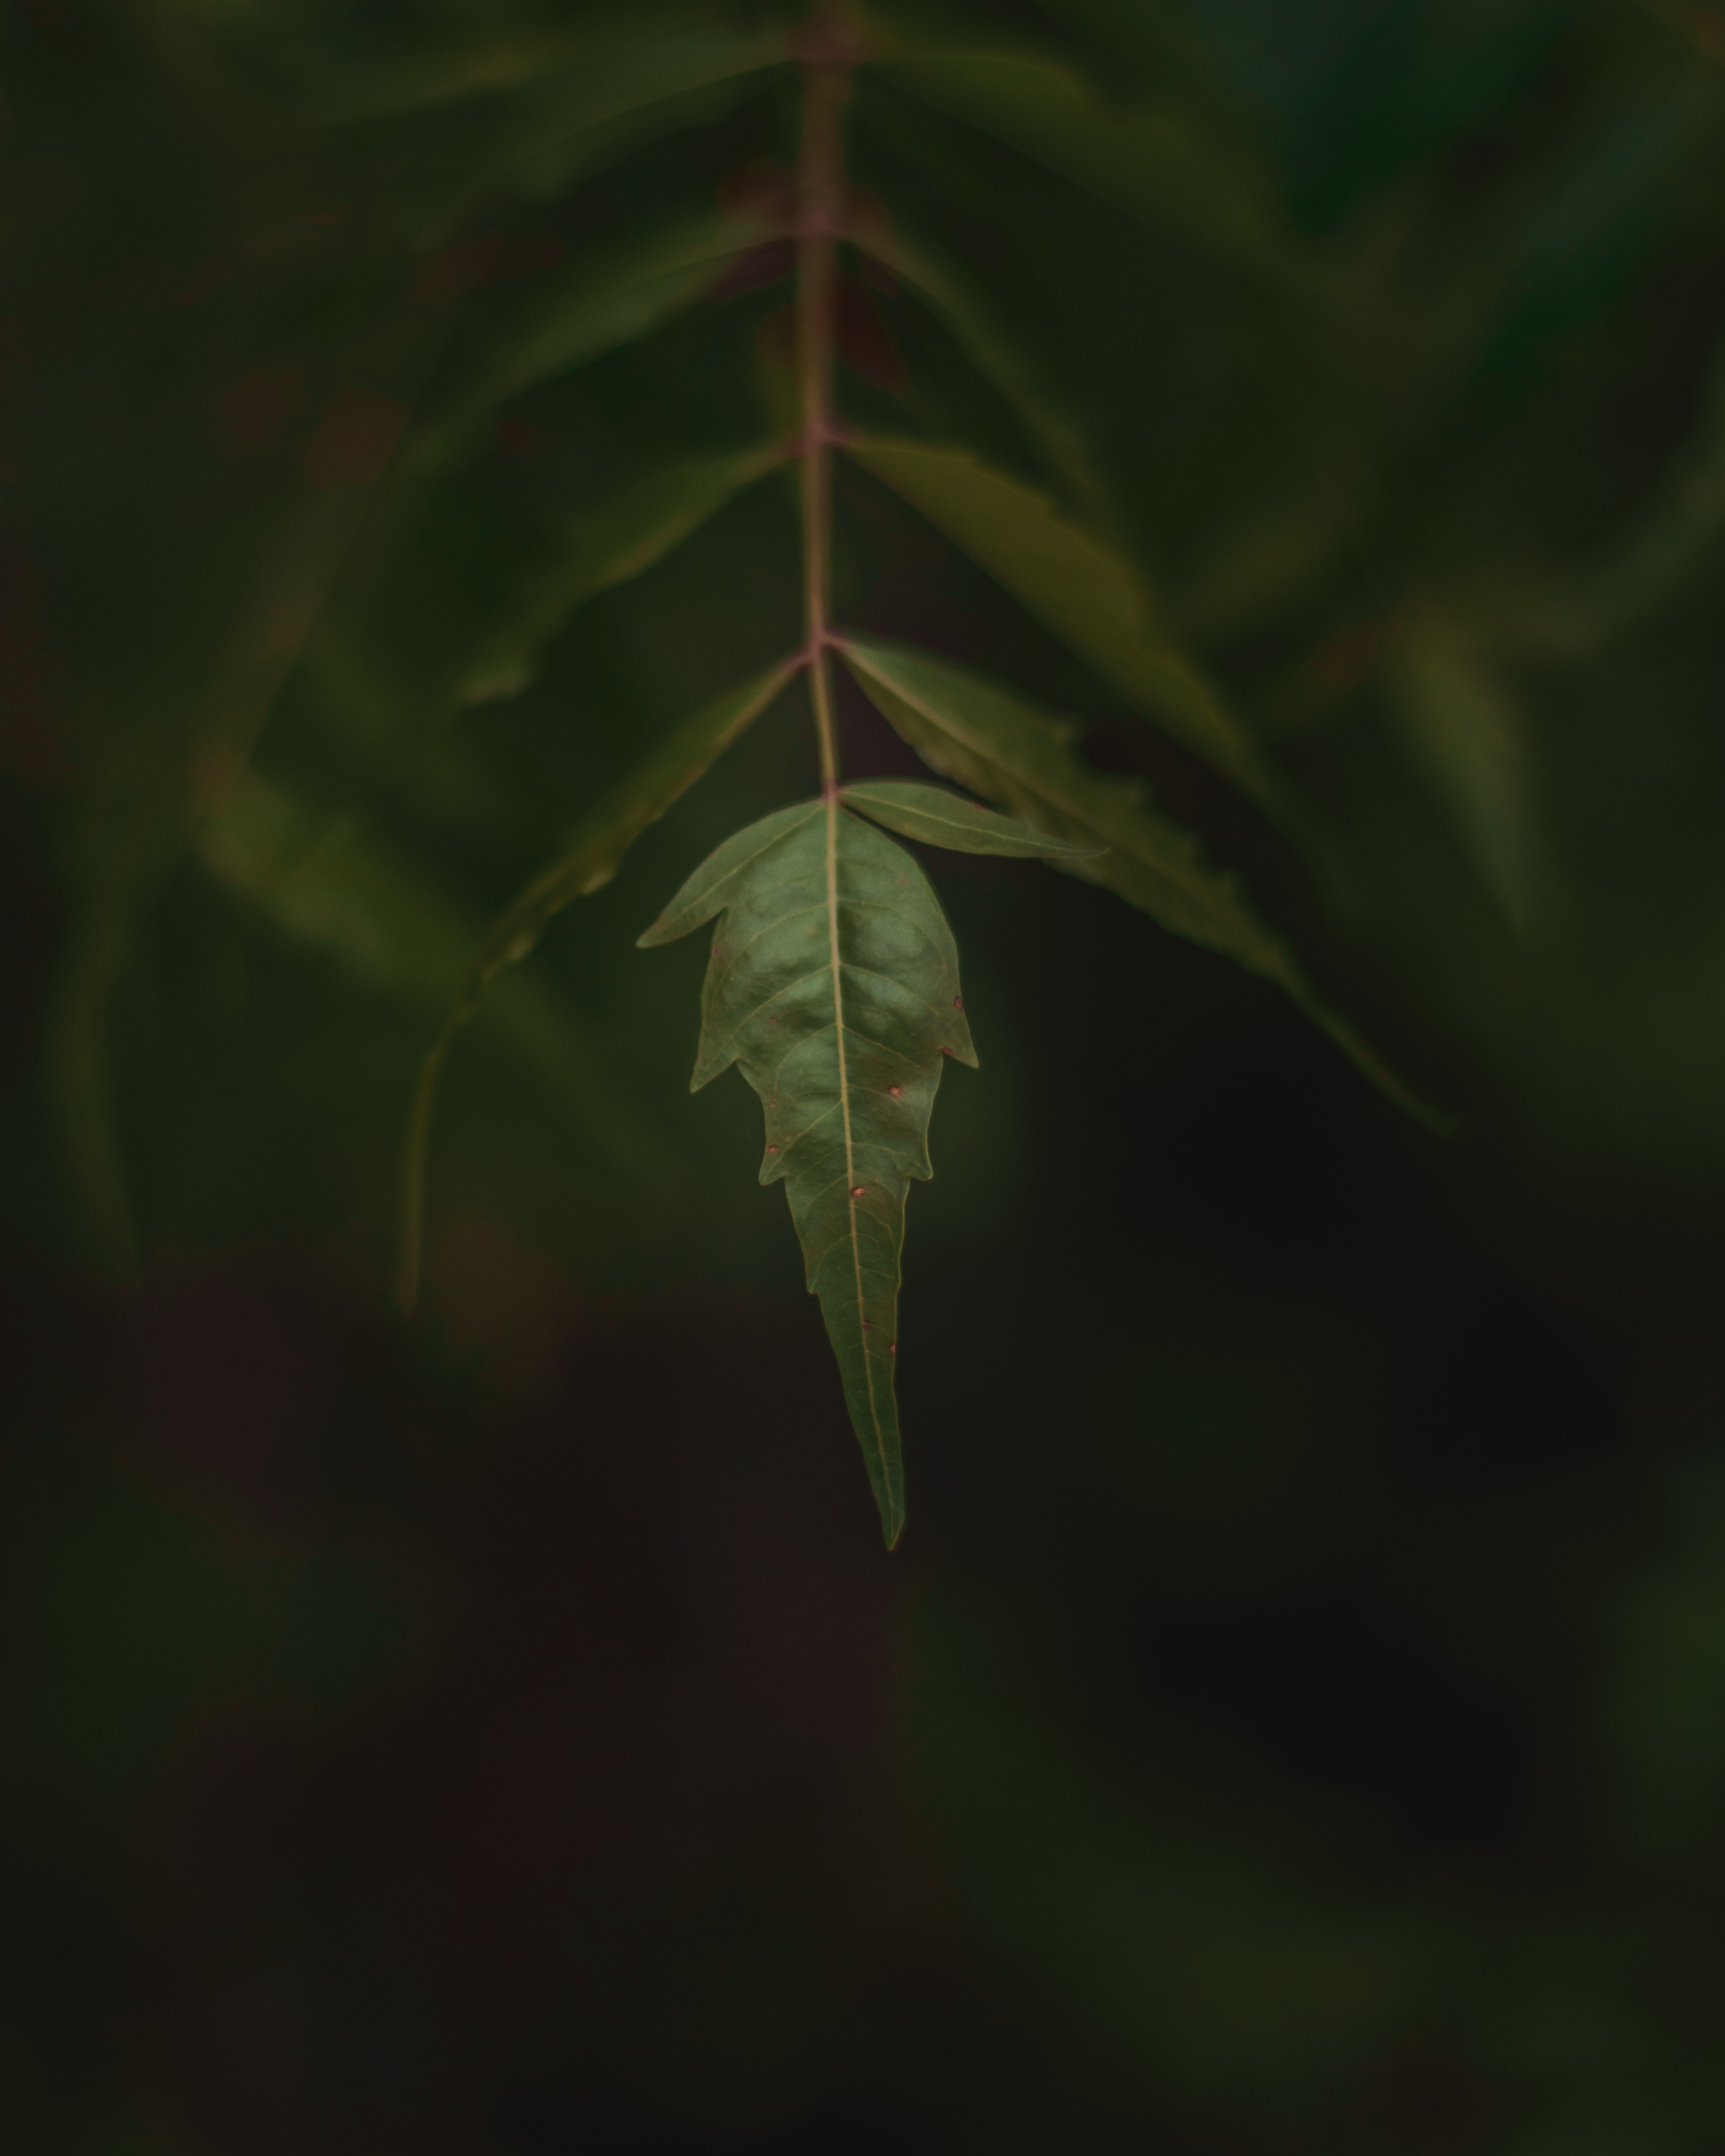 Neem leaf